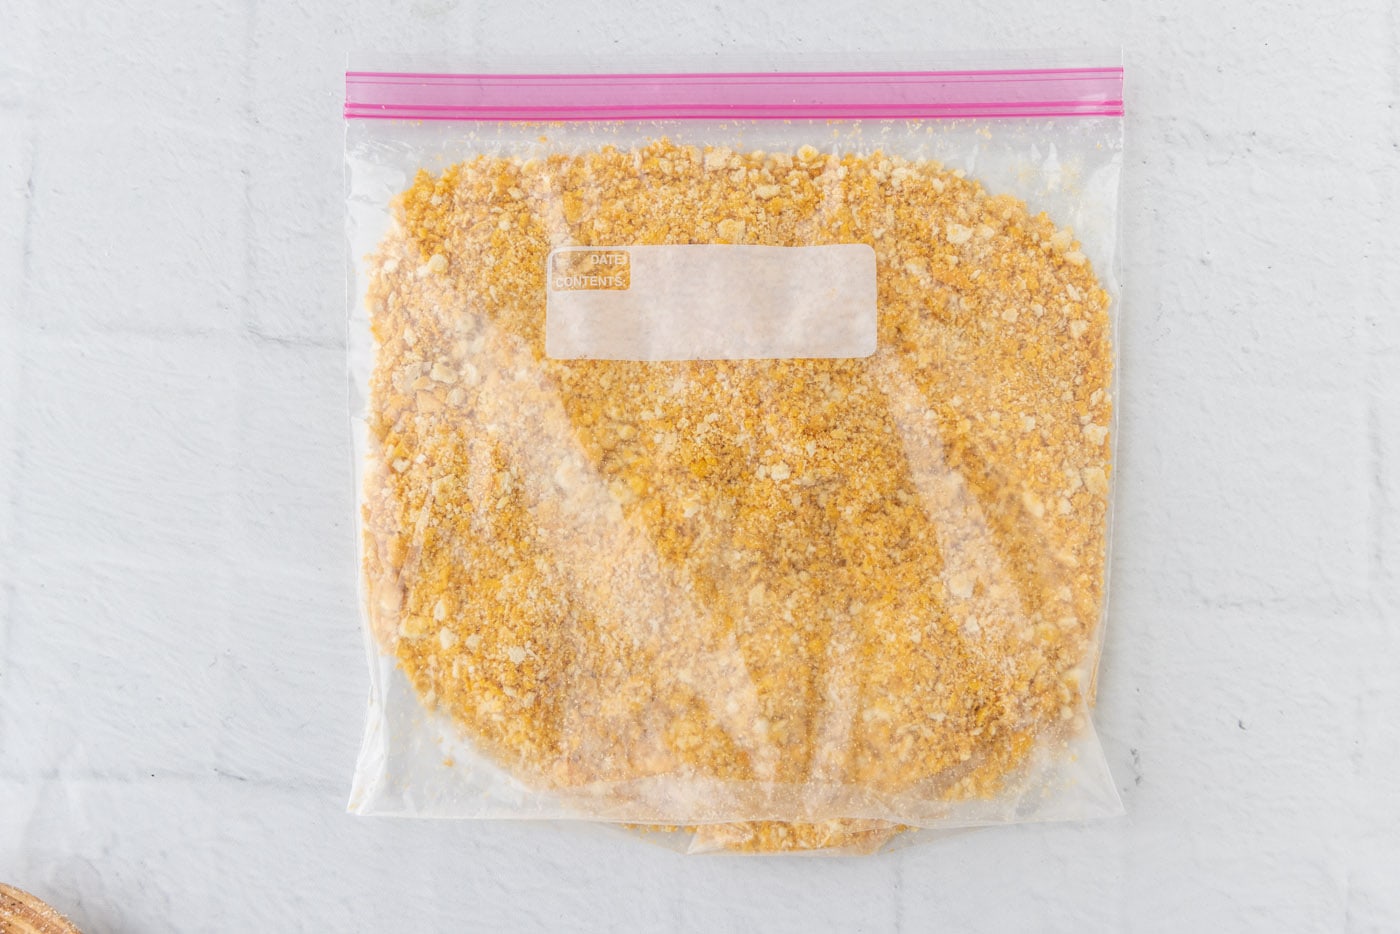 ritz crackers and cornflake crushed in a ziplock bag